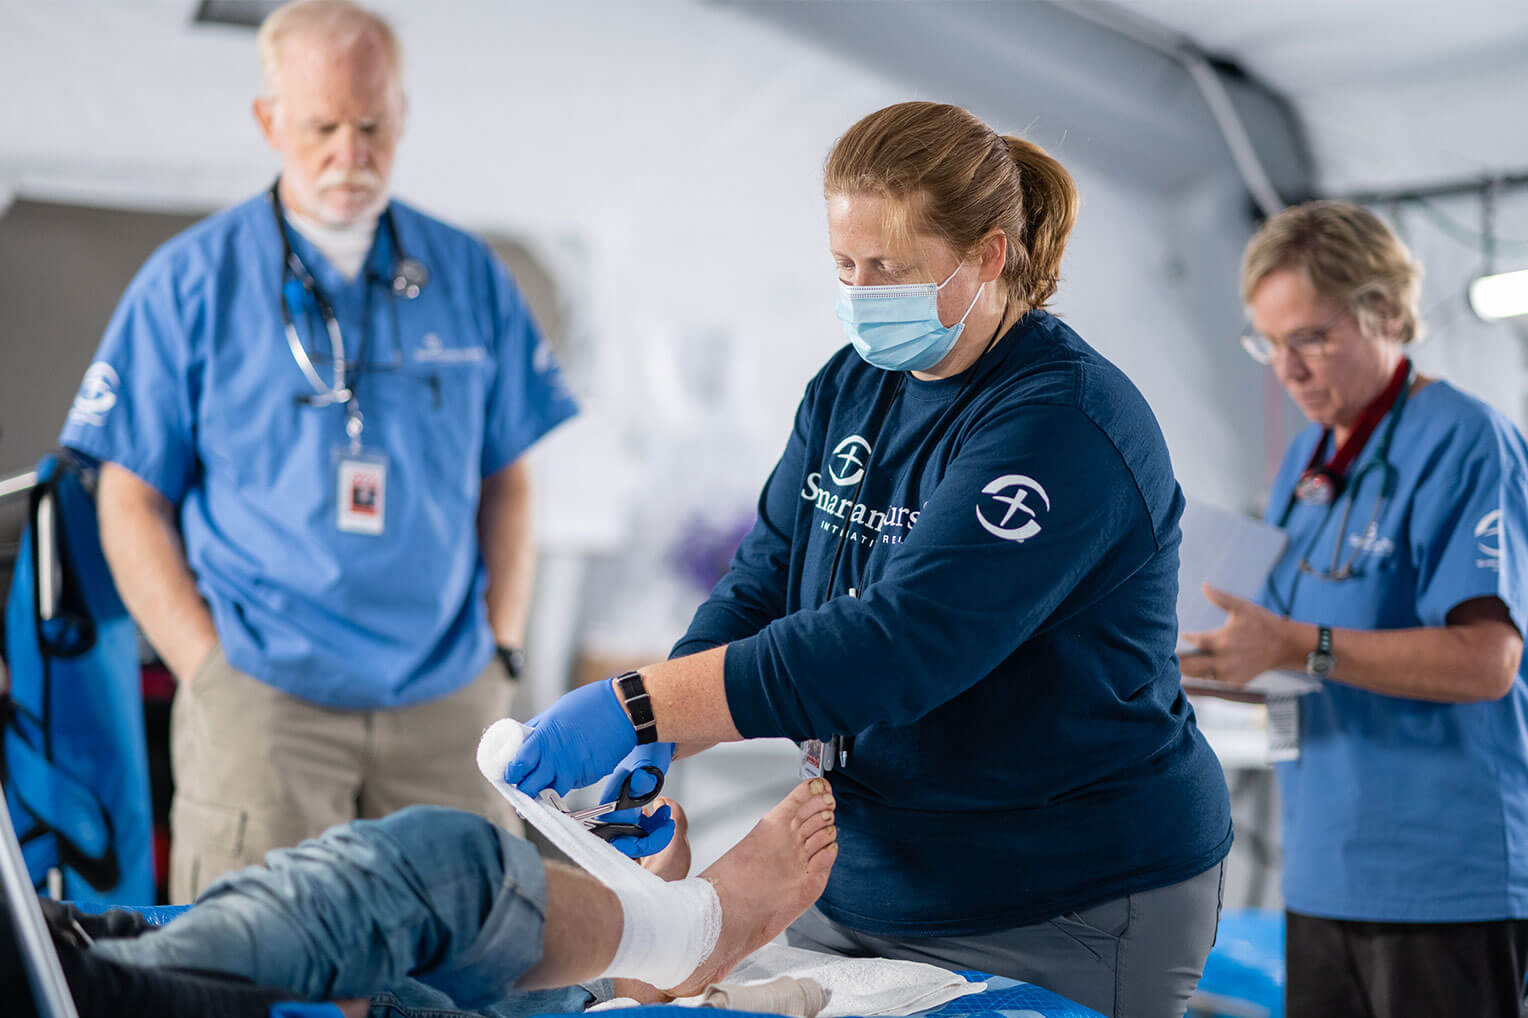 Staffer bandages a foot in Emergency Field Hospital